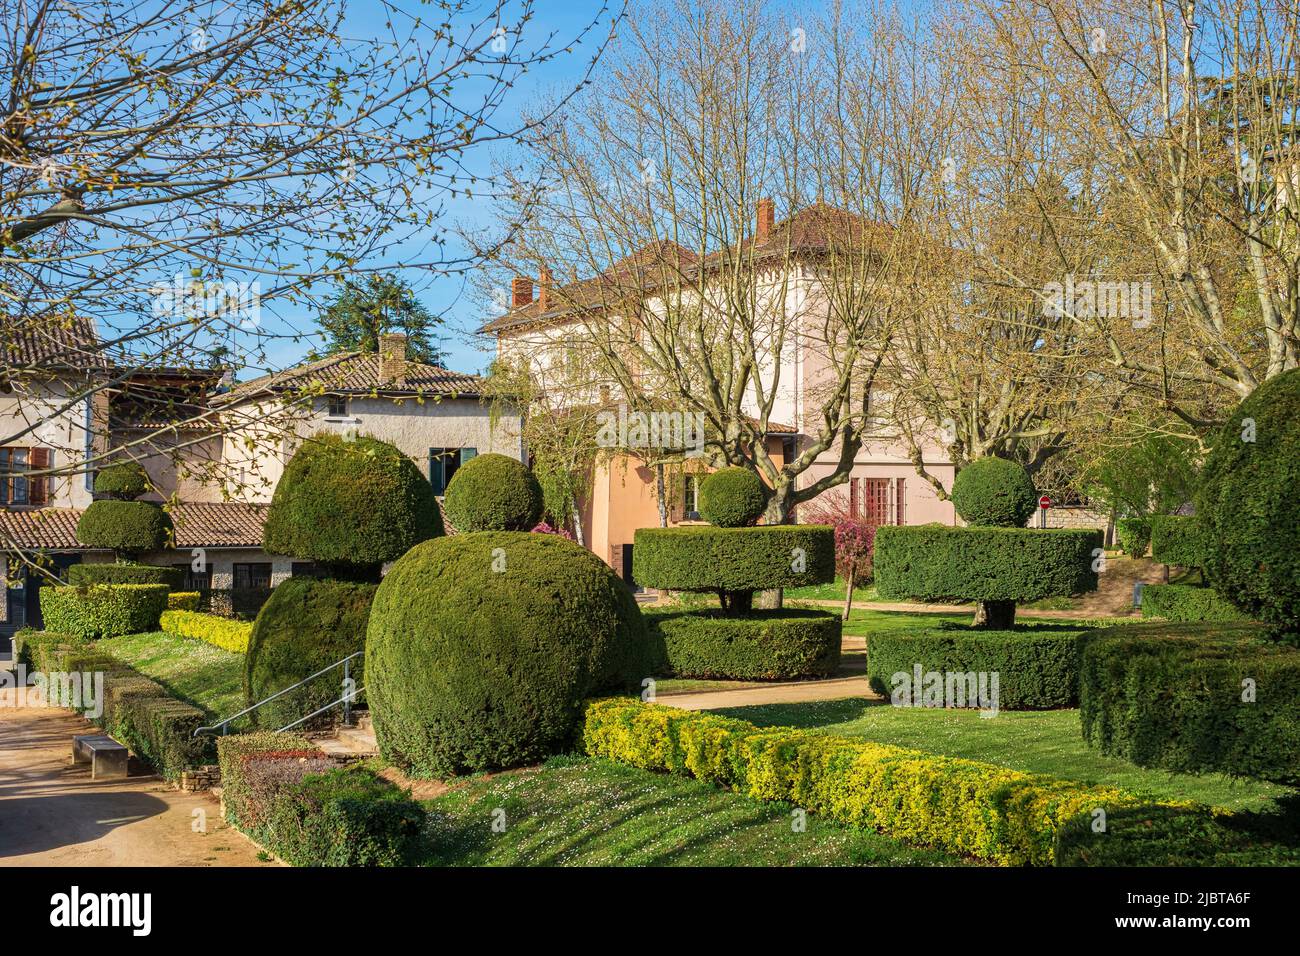 France, Ain, Saint-Bernard, little village on the banks of the Saone river, public garden Stock Photo